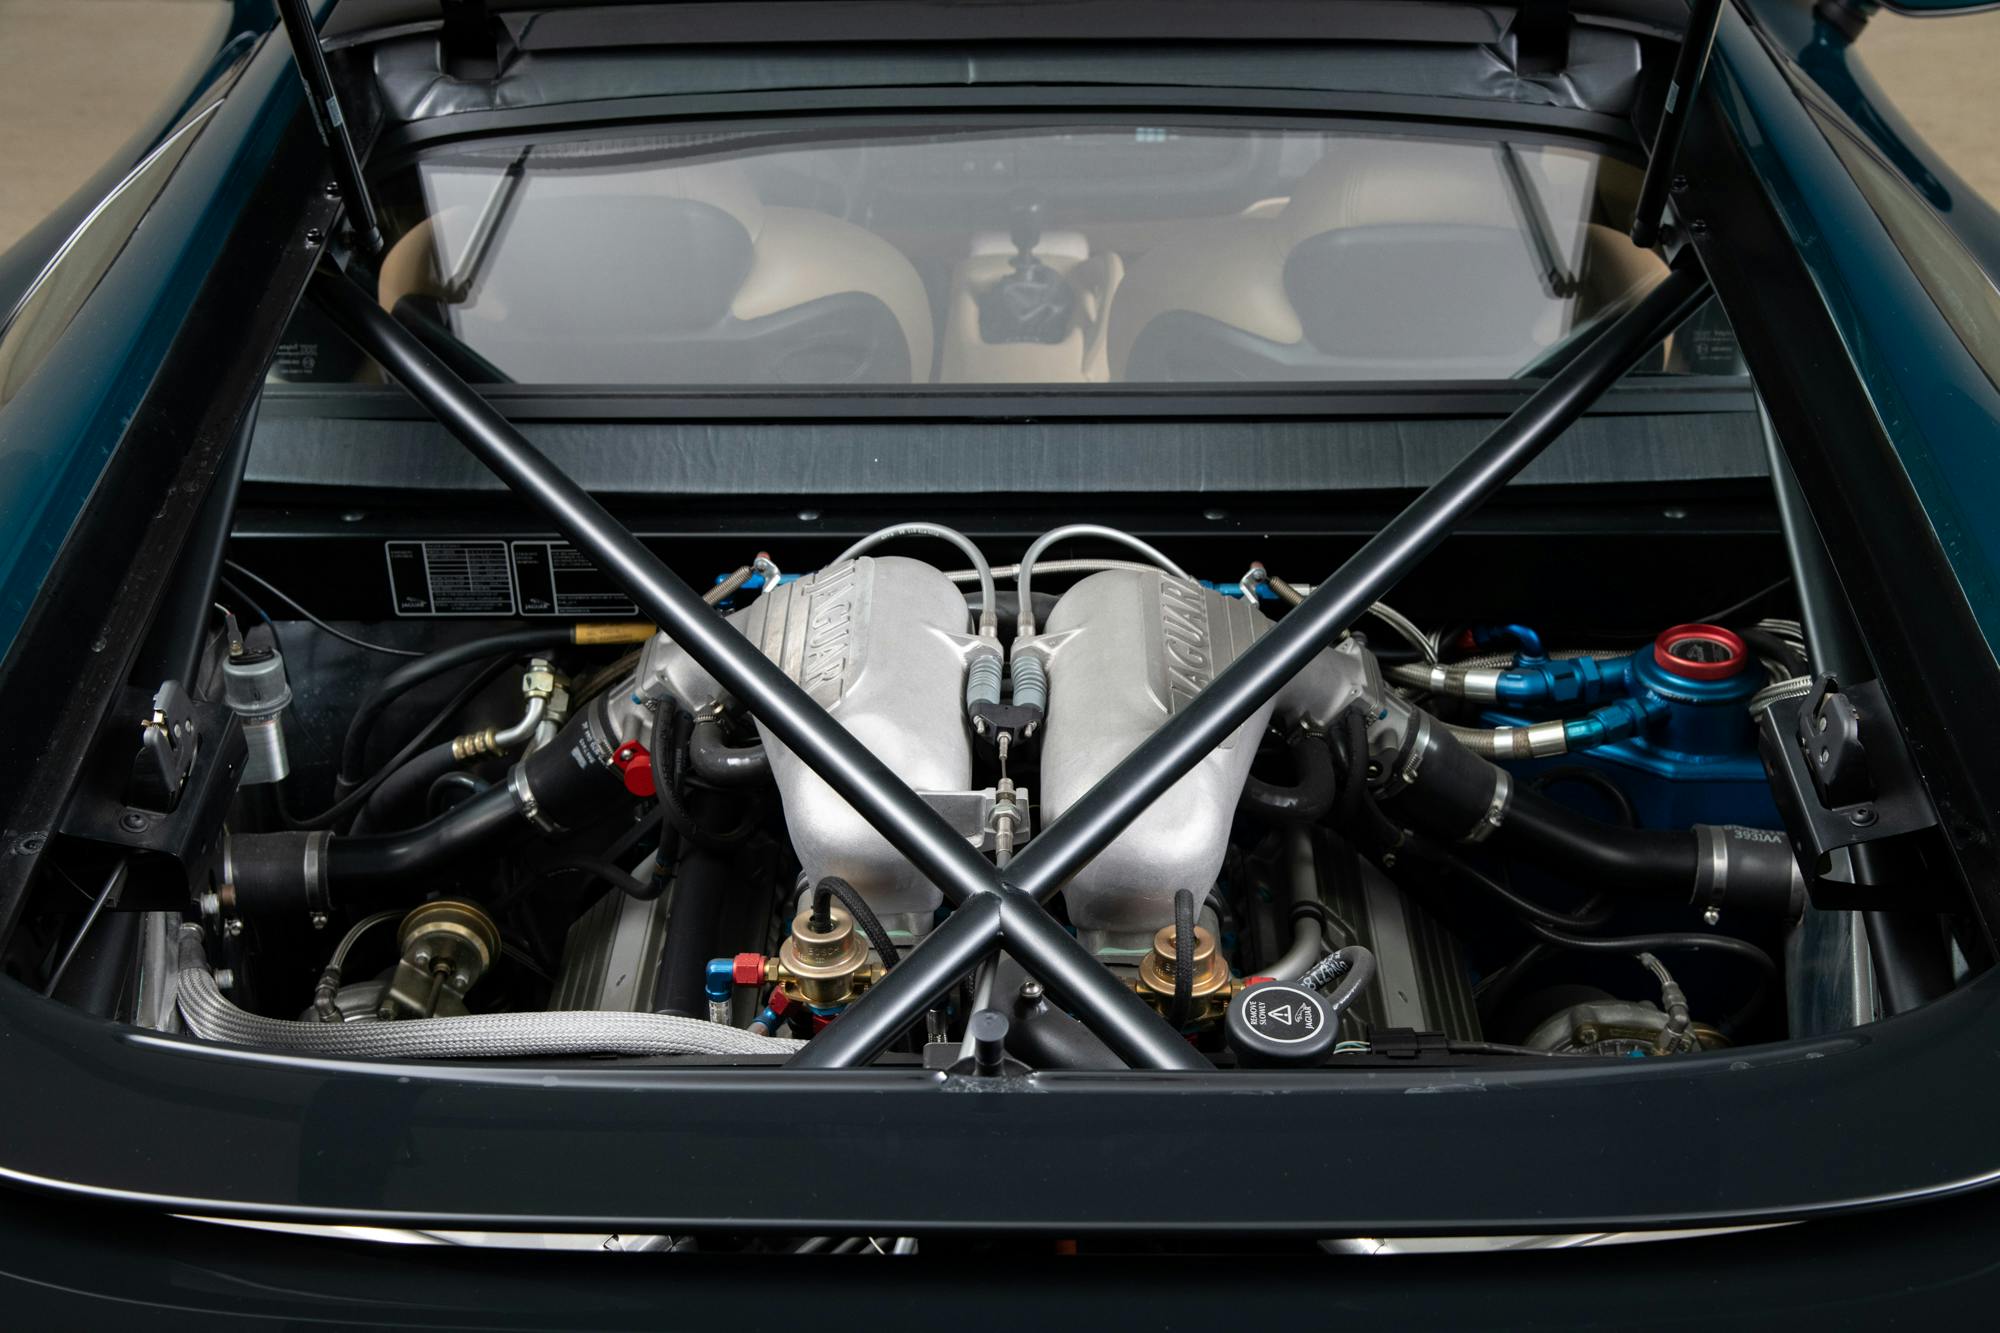 Jaguar XJ220 engine bay